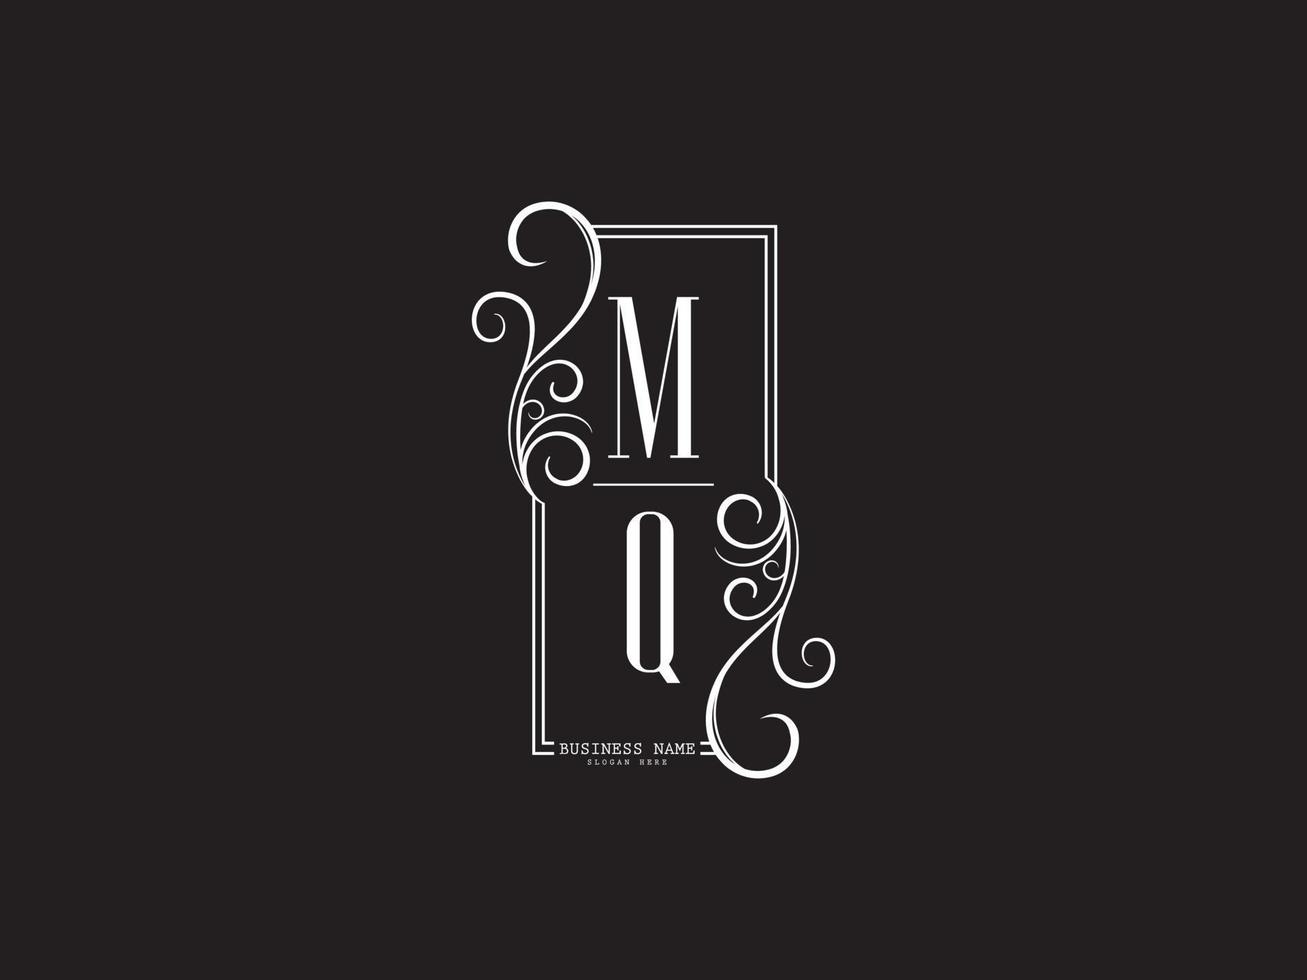 ícone moderno do logotipo mq, iniciais mq qm design de letras do logotipo de luxo vetor